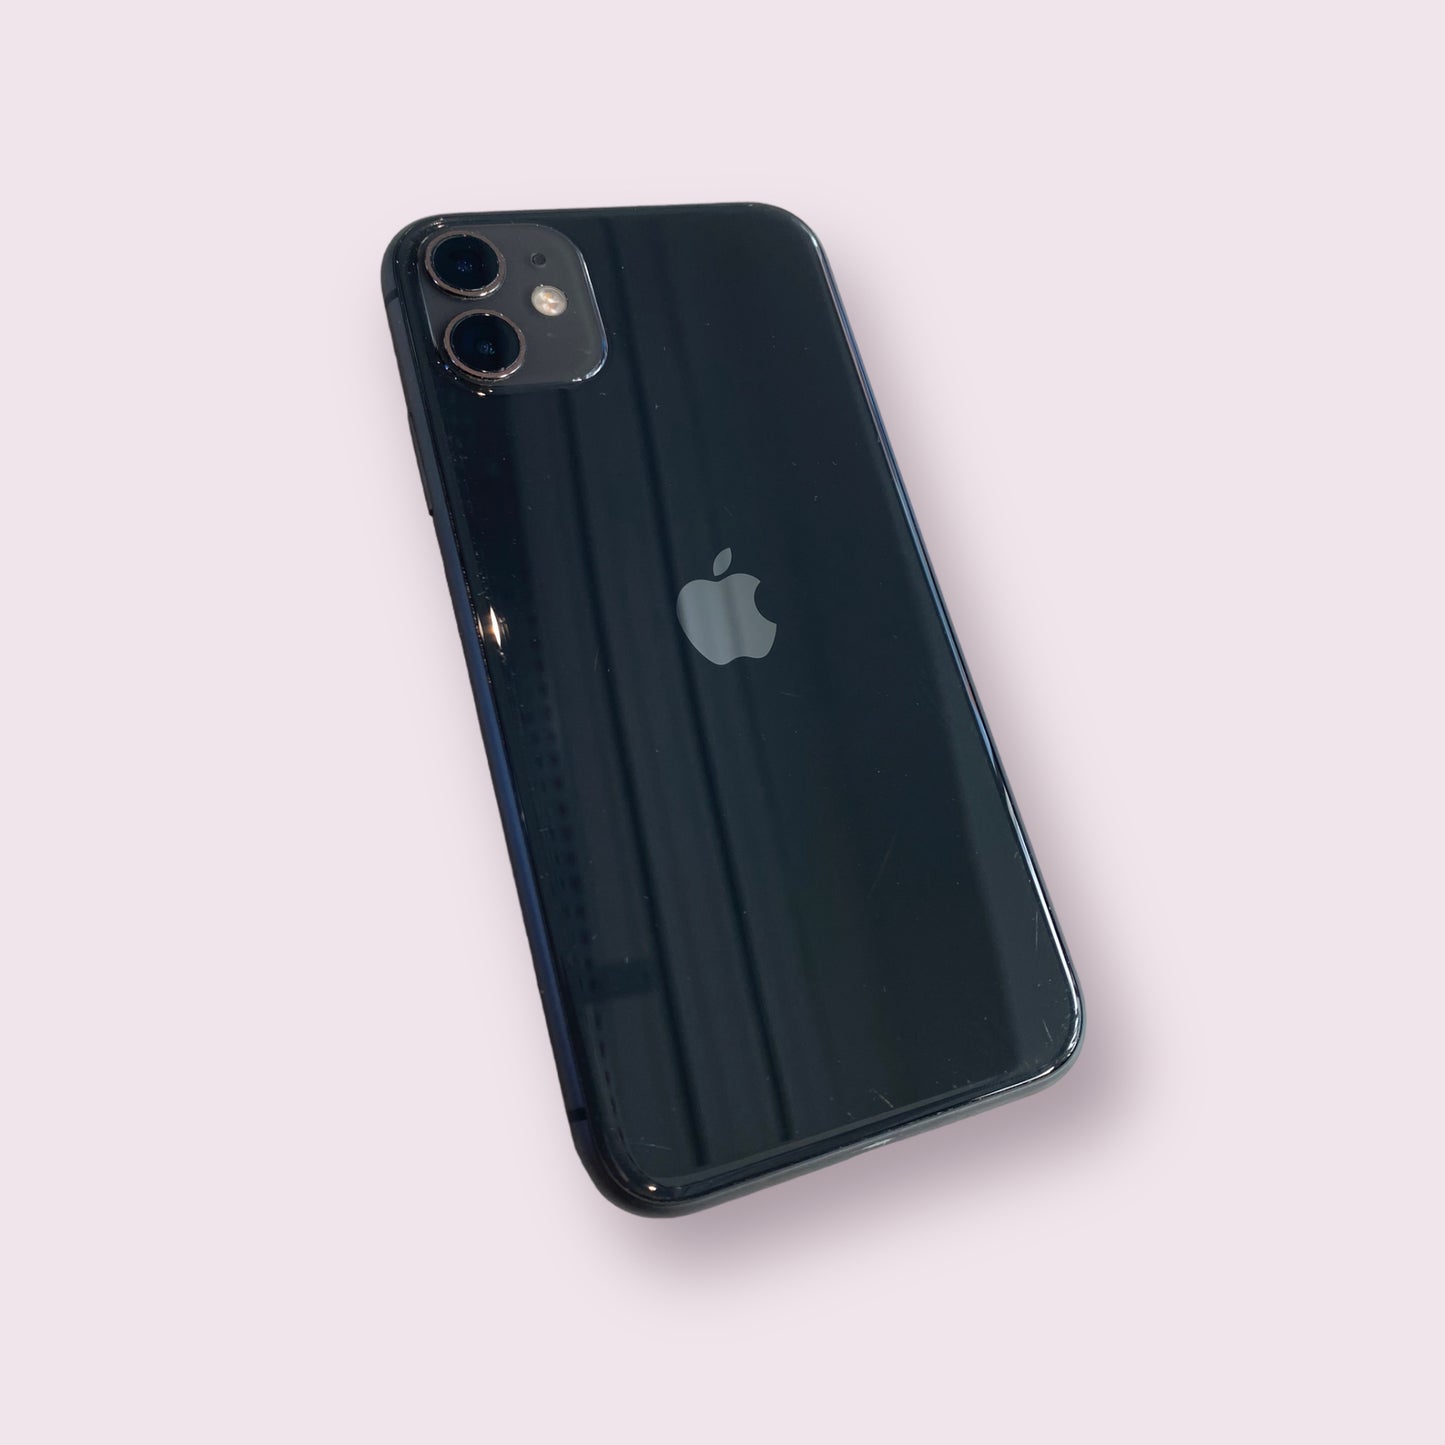 Apple iPhone 11 128GB Black Smartphone - Unlocked - Grade B